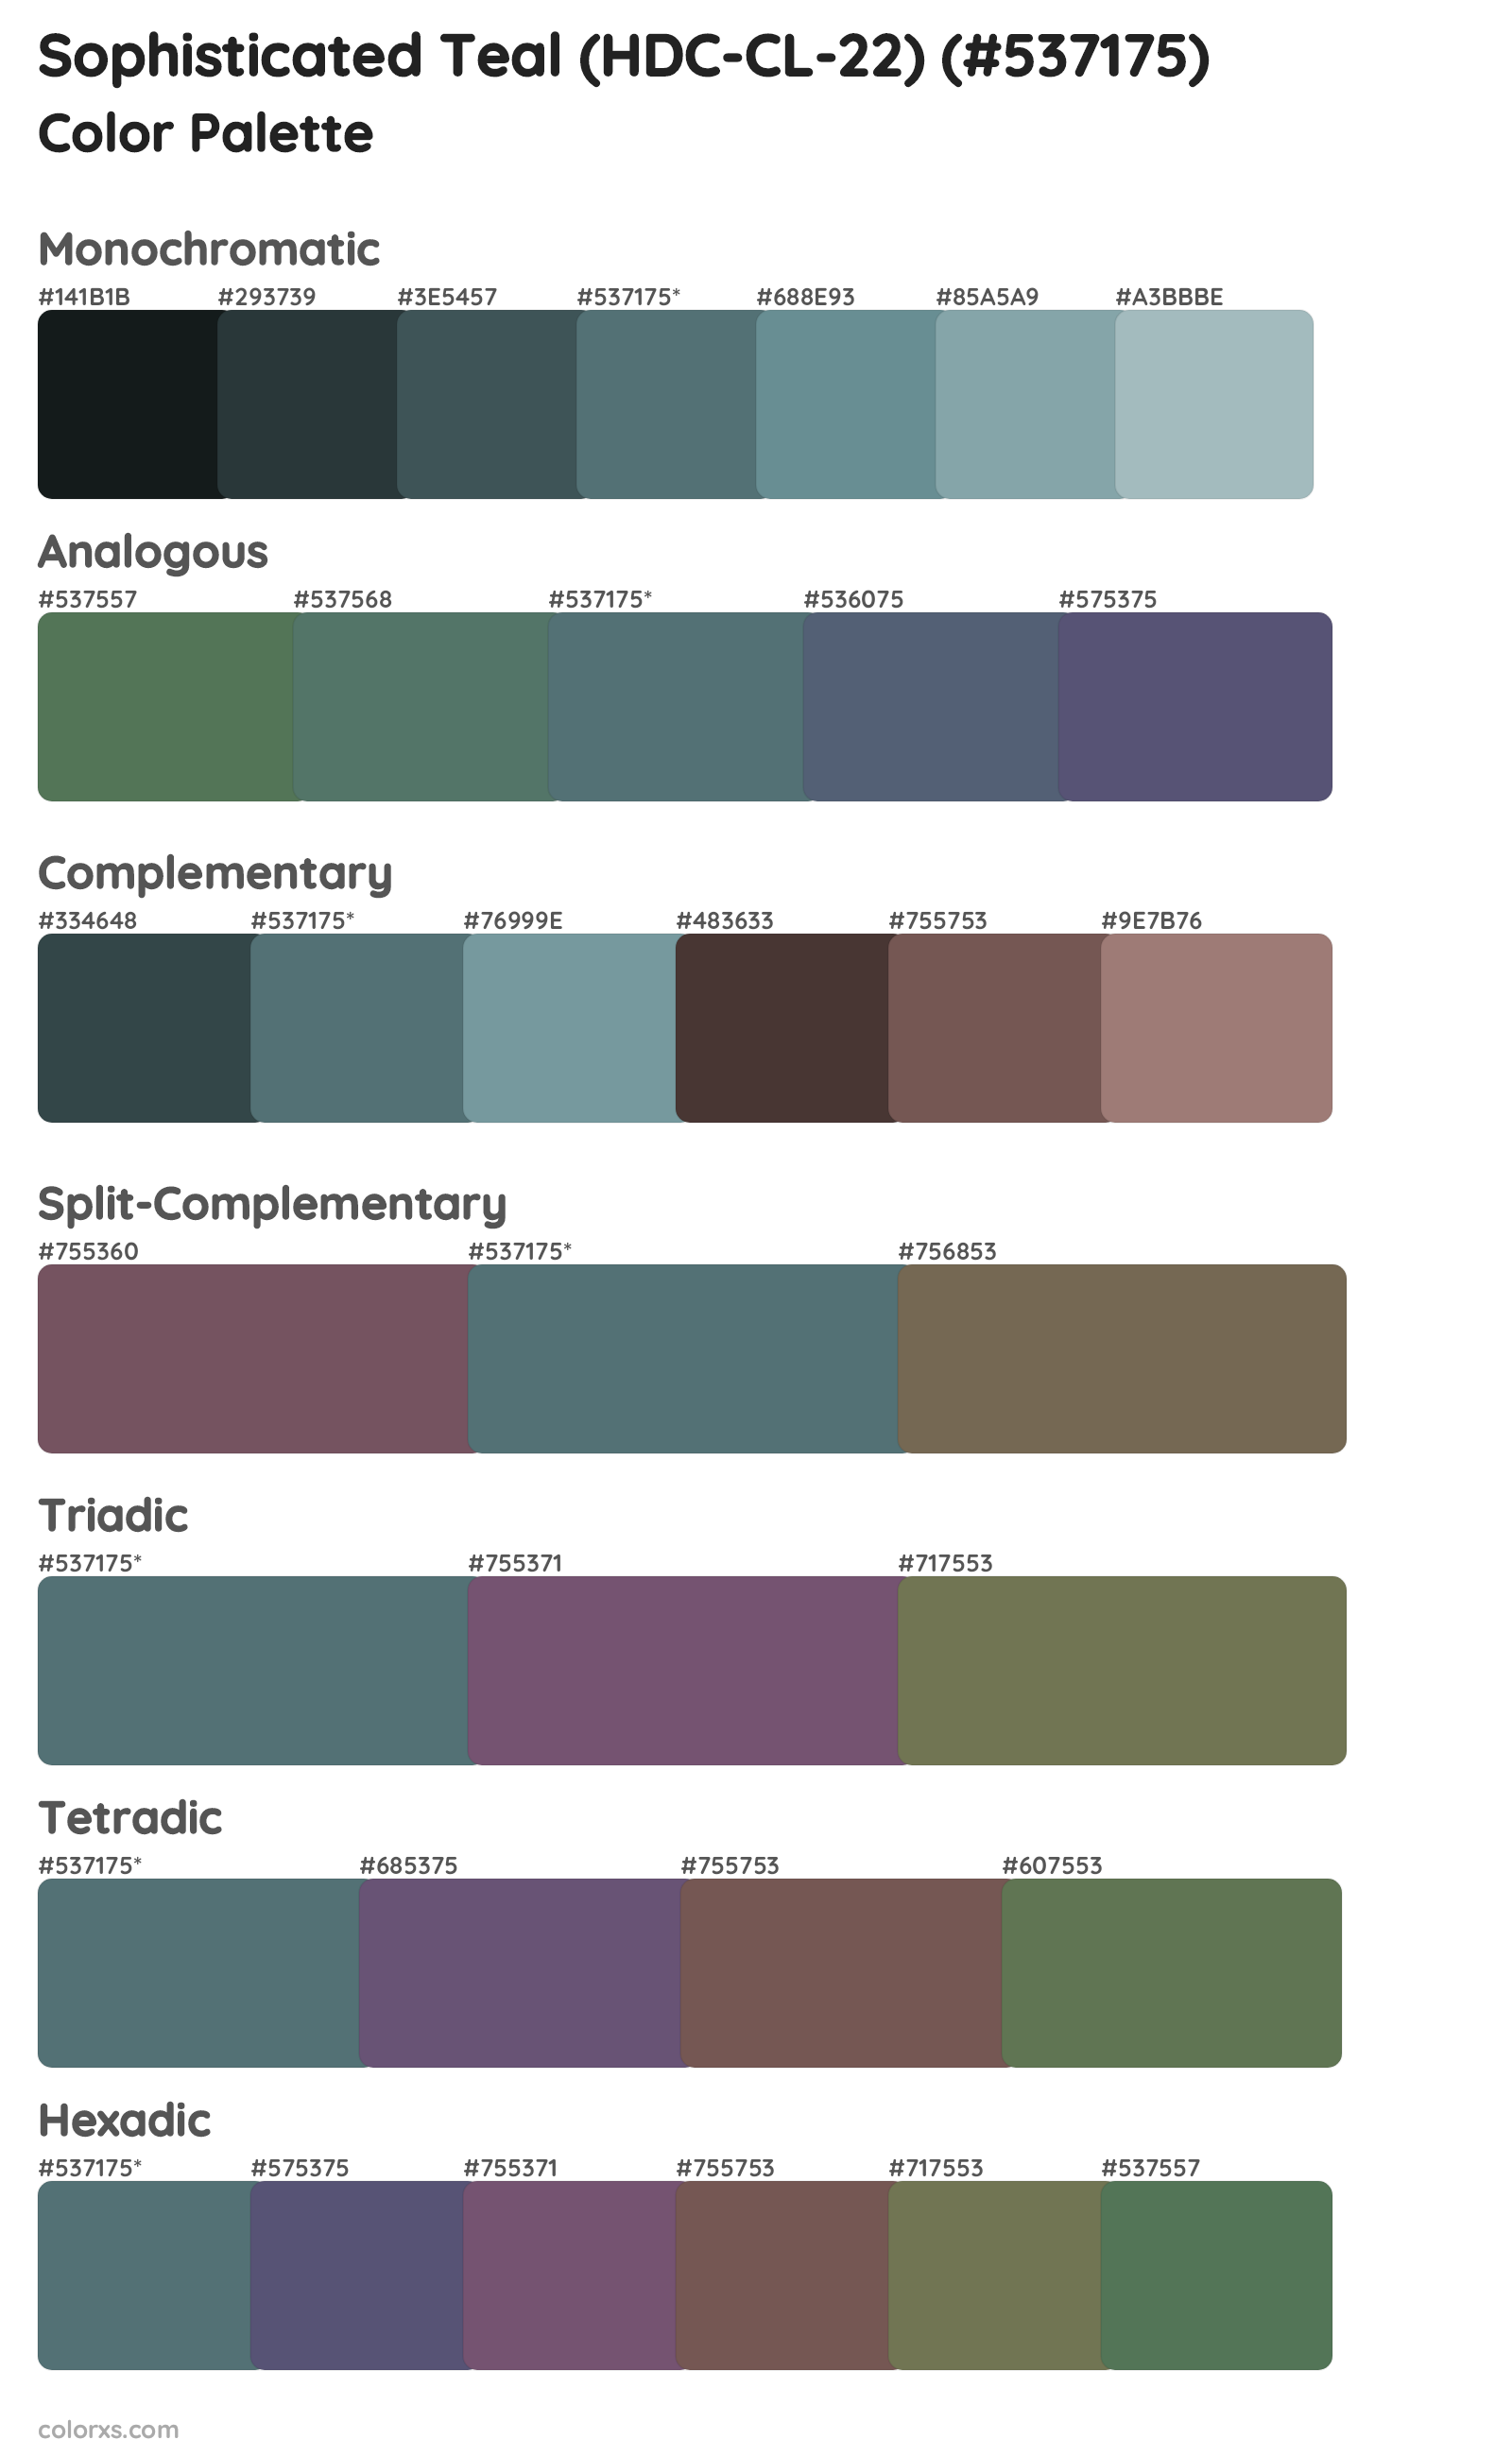 Sophisticated Teal (HDC-CL-22) Color Scheme Palettes